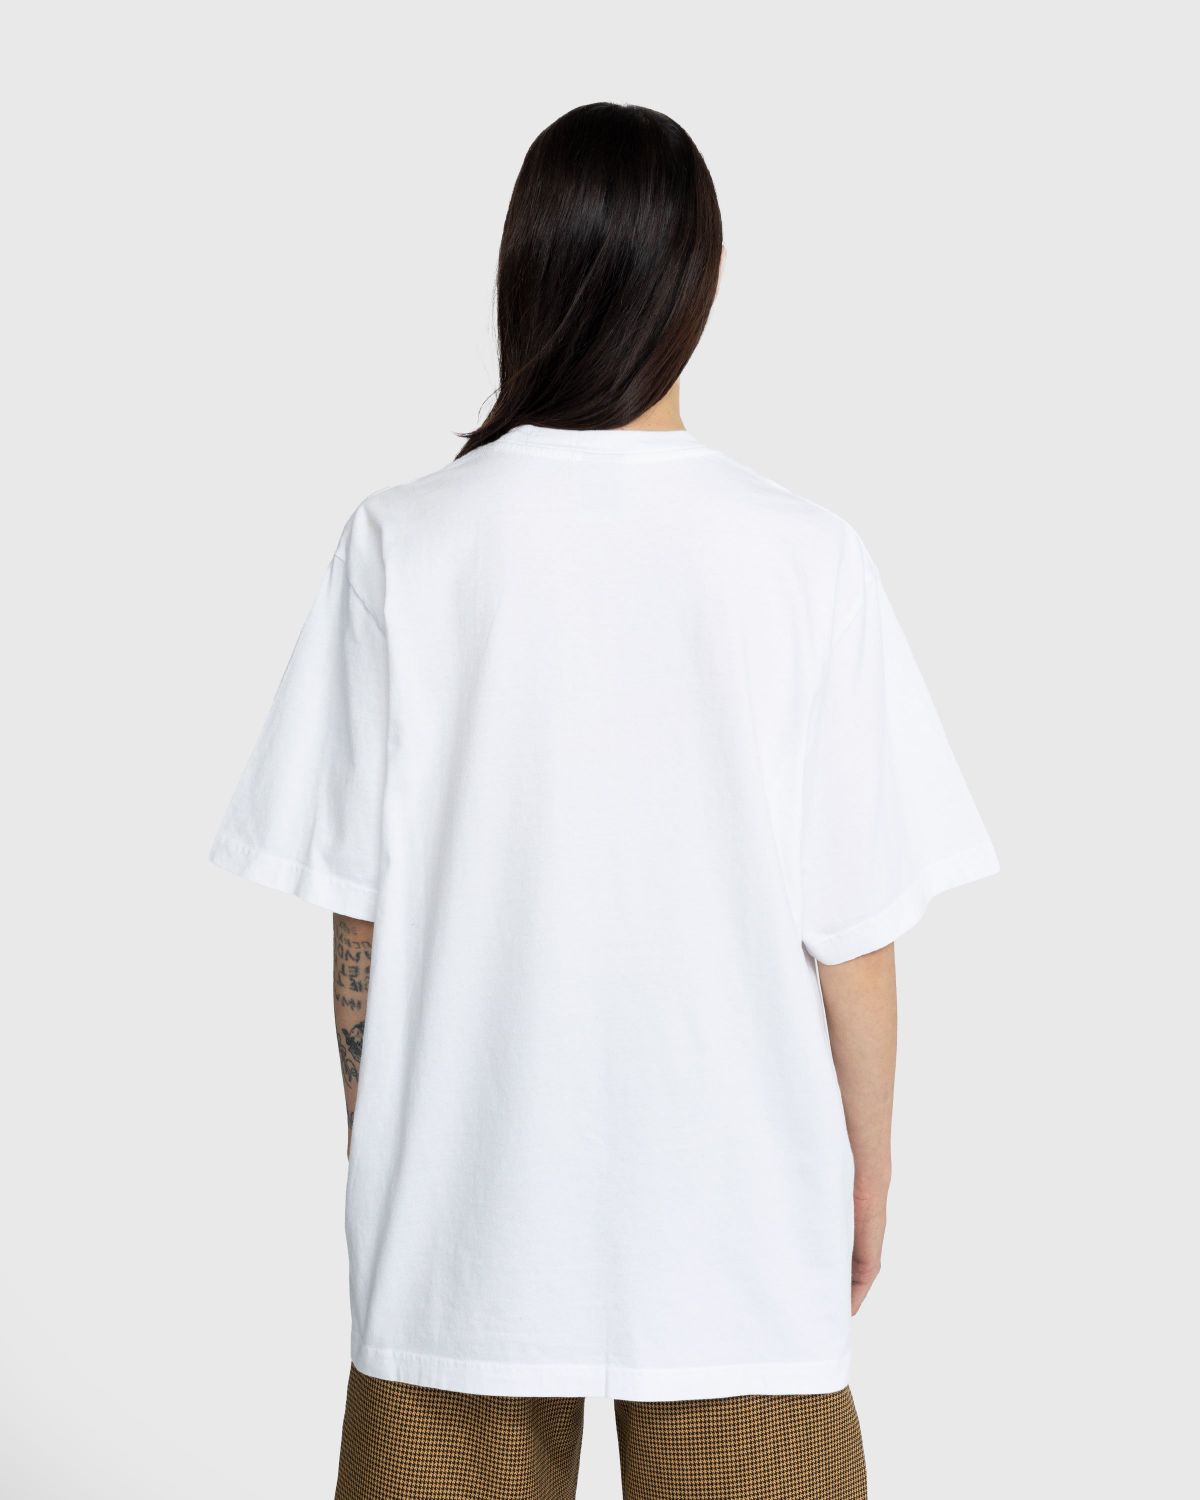 Noon Goons – Bubble T-Shirt White | Highsnobiety Shop